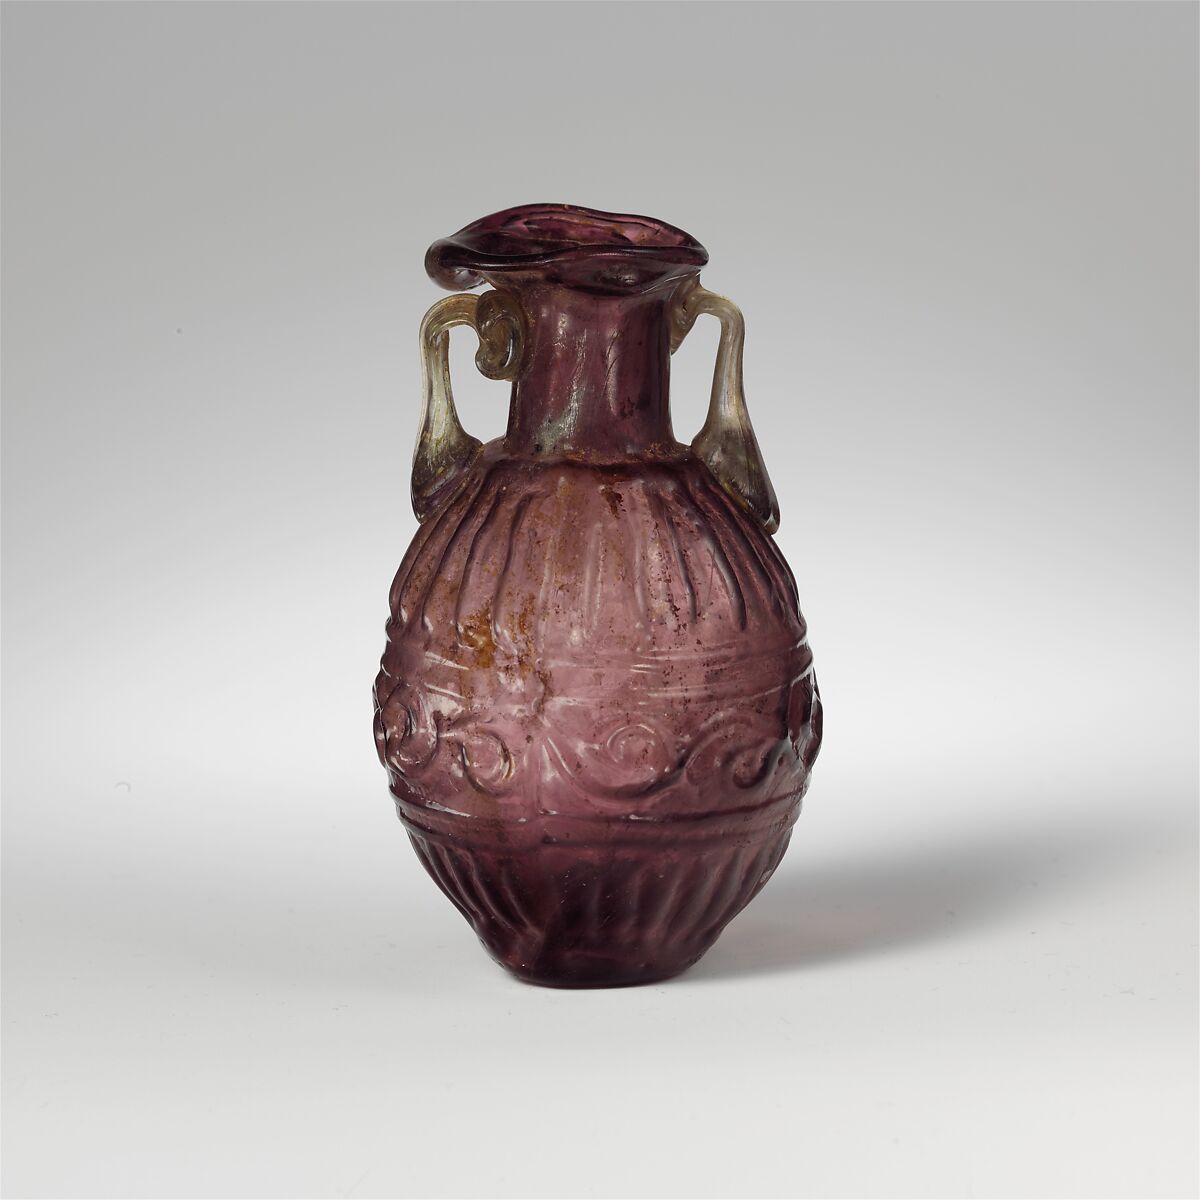 Glass amphoriskos (perfume flask), Glass, Roman, Syrian 